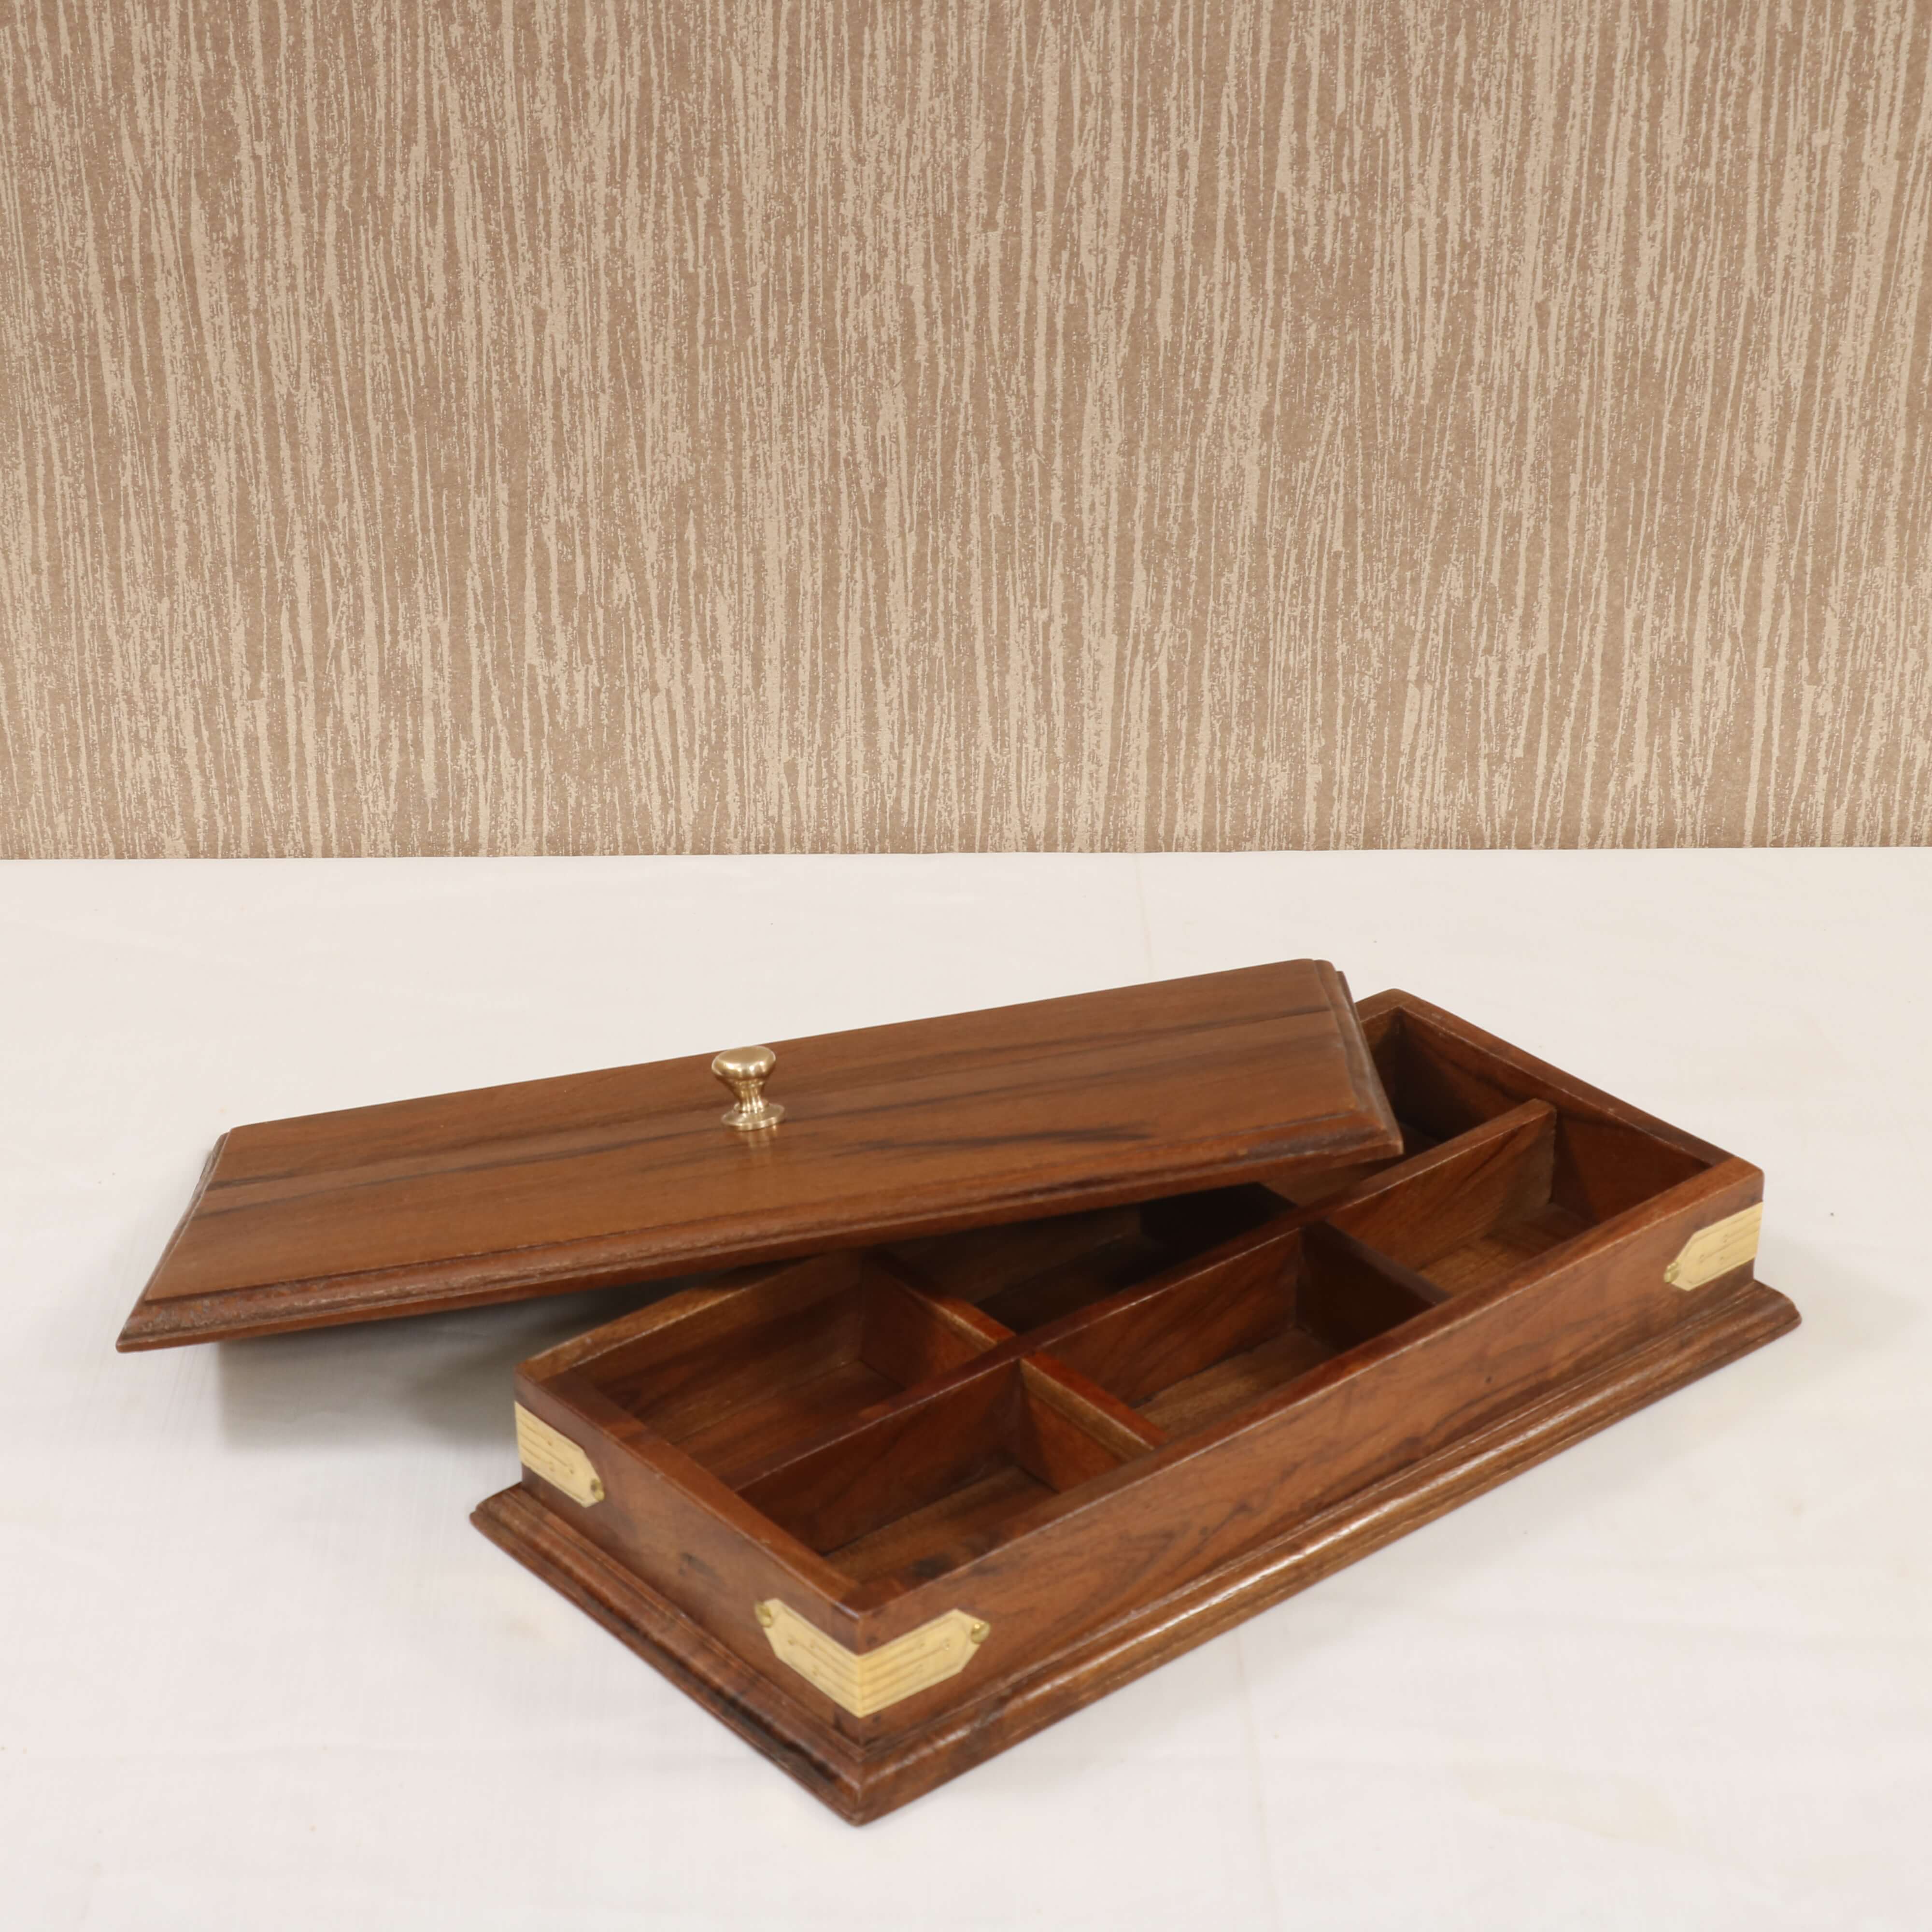 Rustic Wooden Box Plain Wooden Box